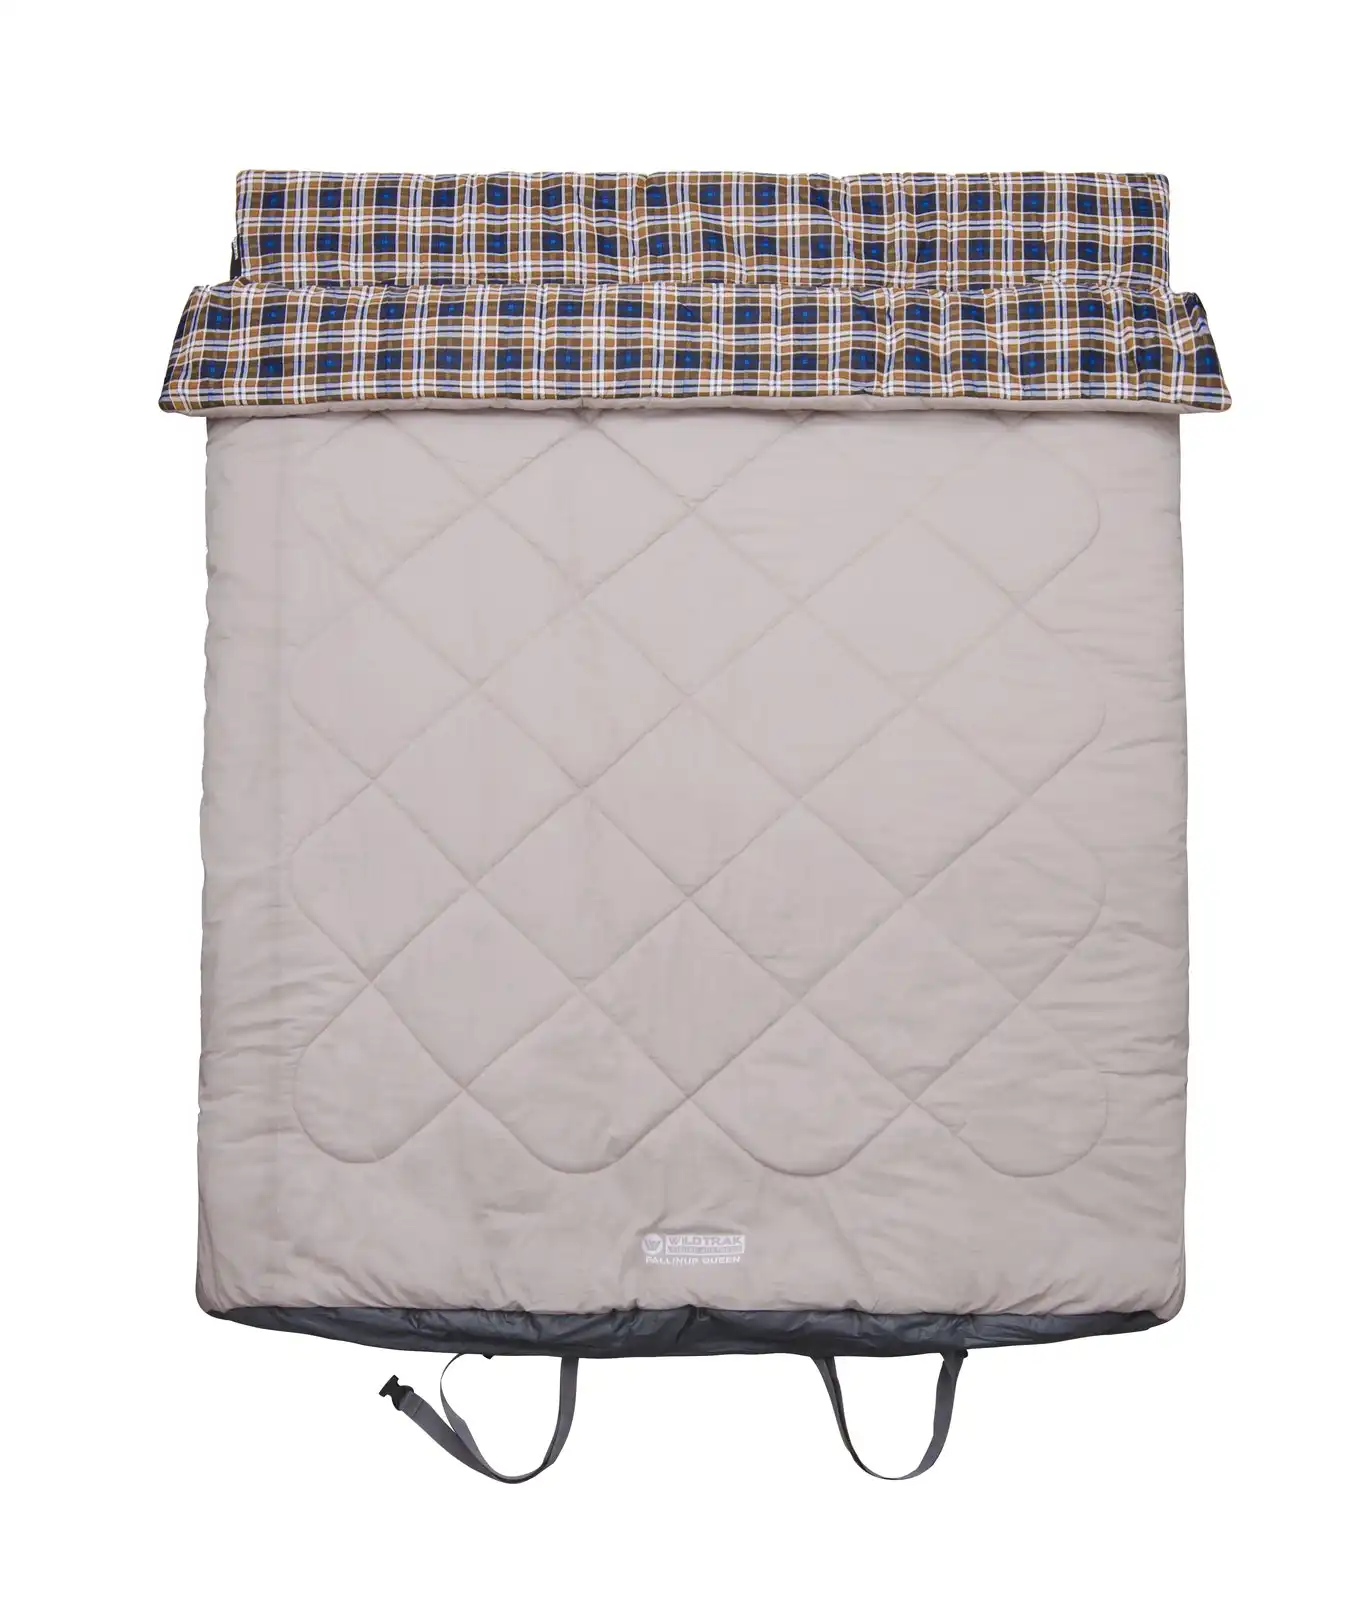 Wildtrak Pallinup 220x152cm Queen Comfort Sleeping Bag Thermal Camping Sleeper